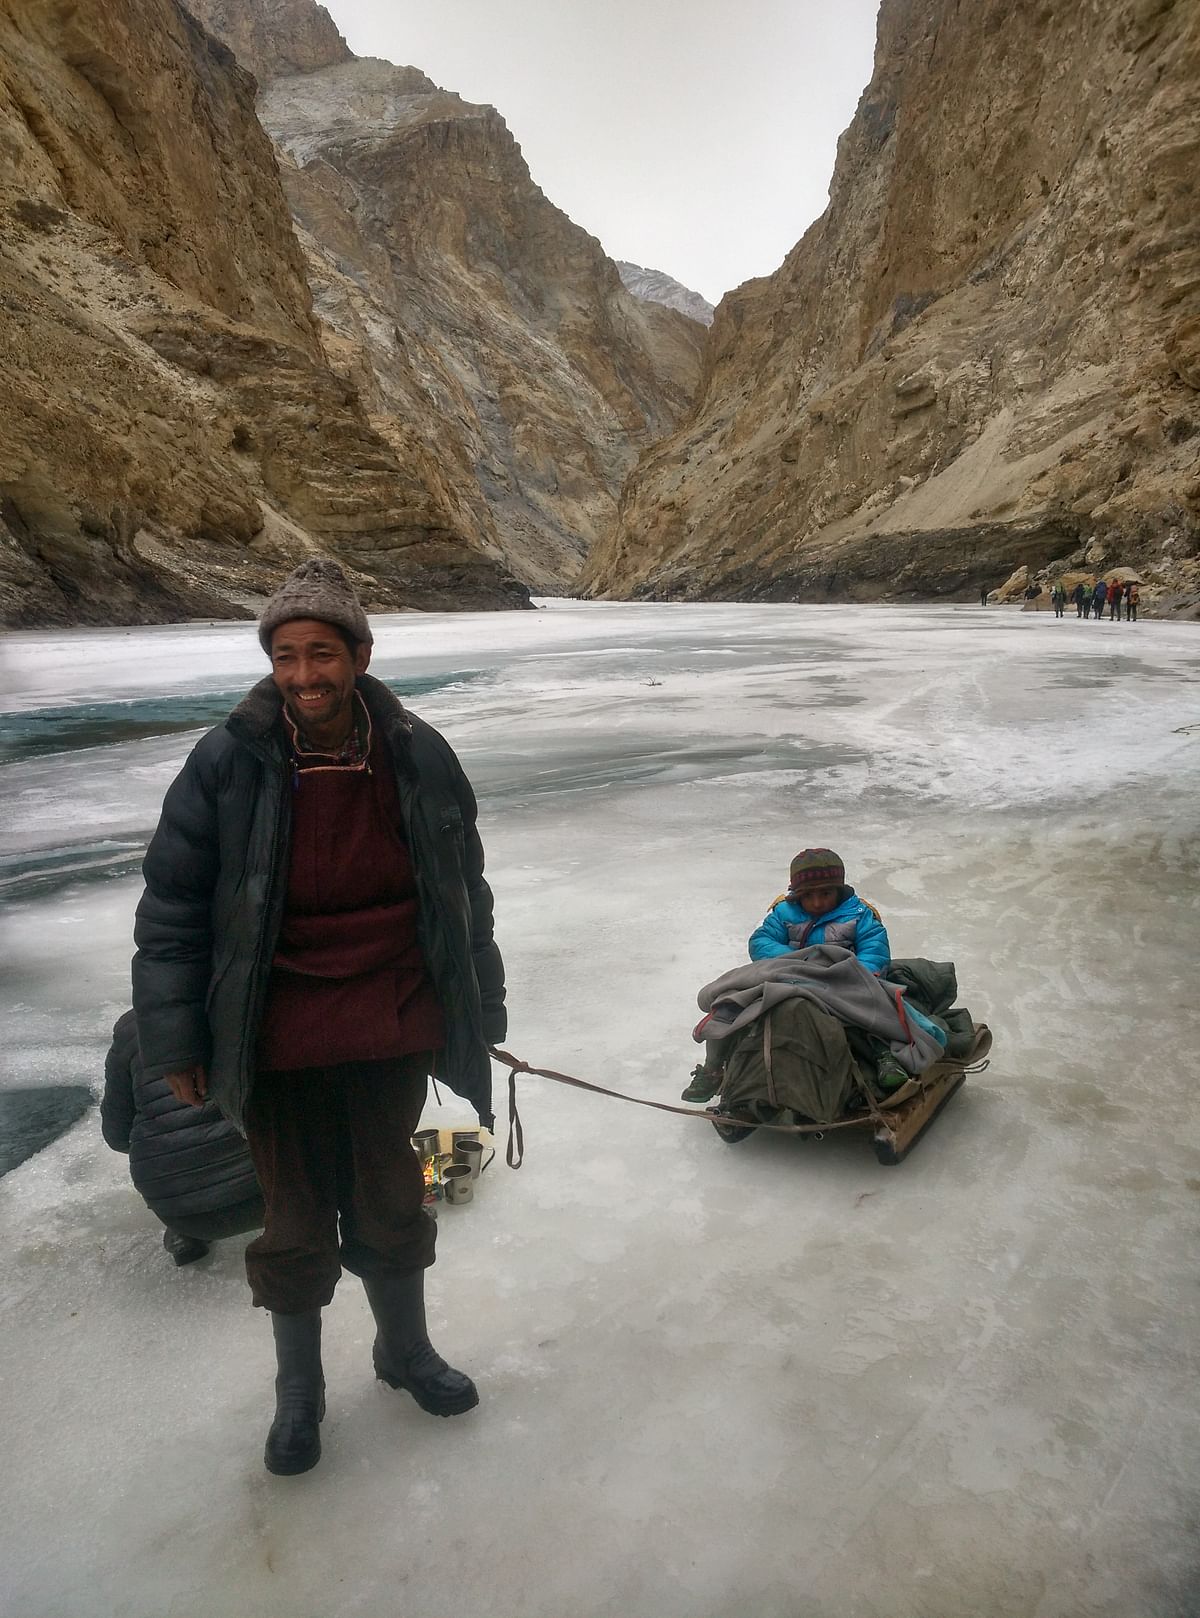 Chadar Trek in Ladakh is one of the most amazing treks on the frozen Zanskar River